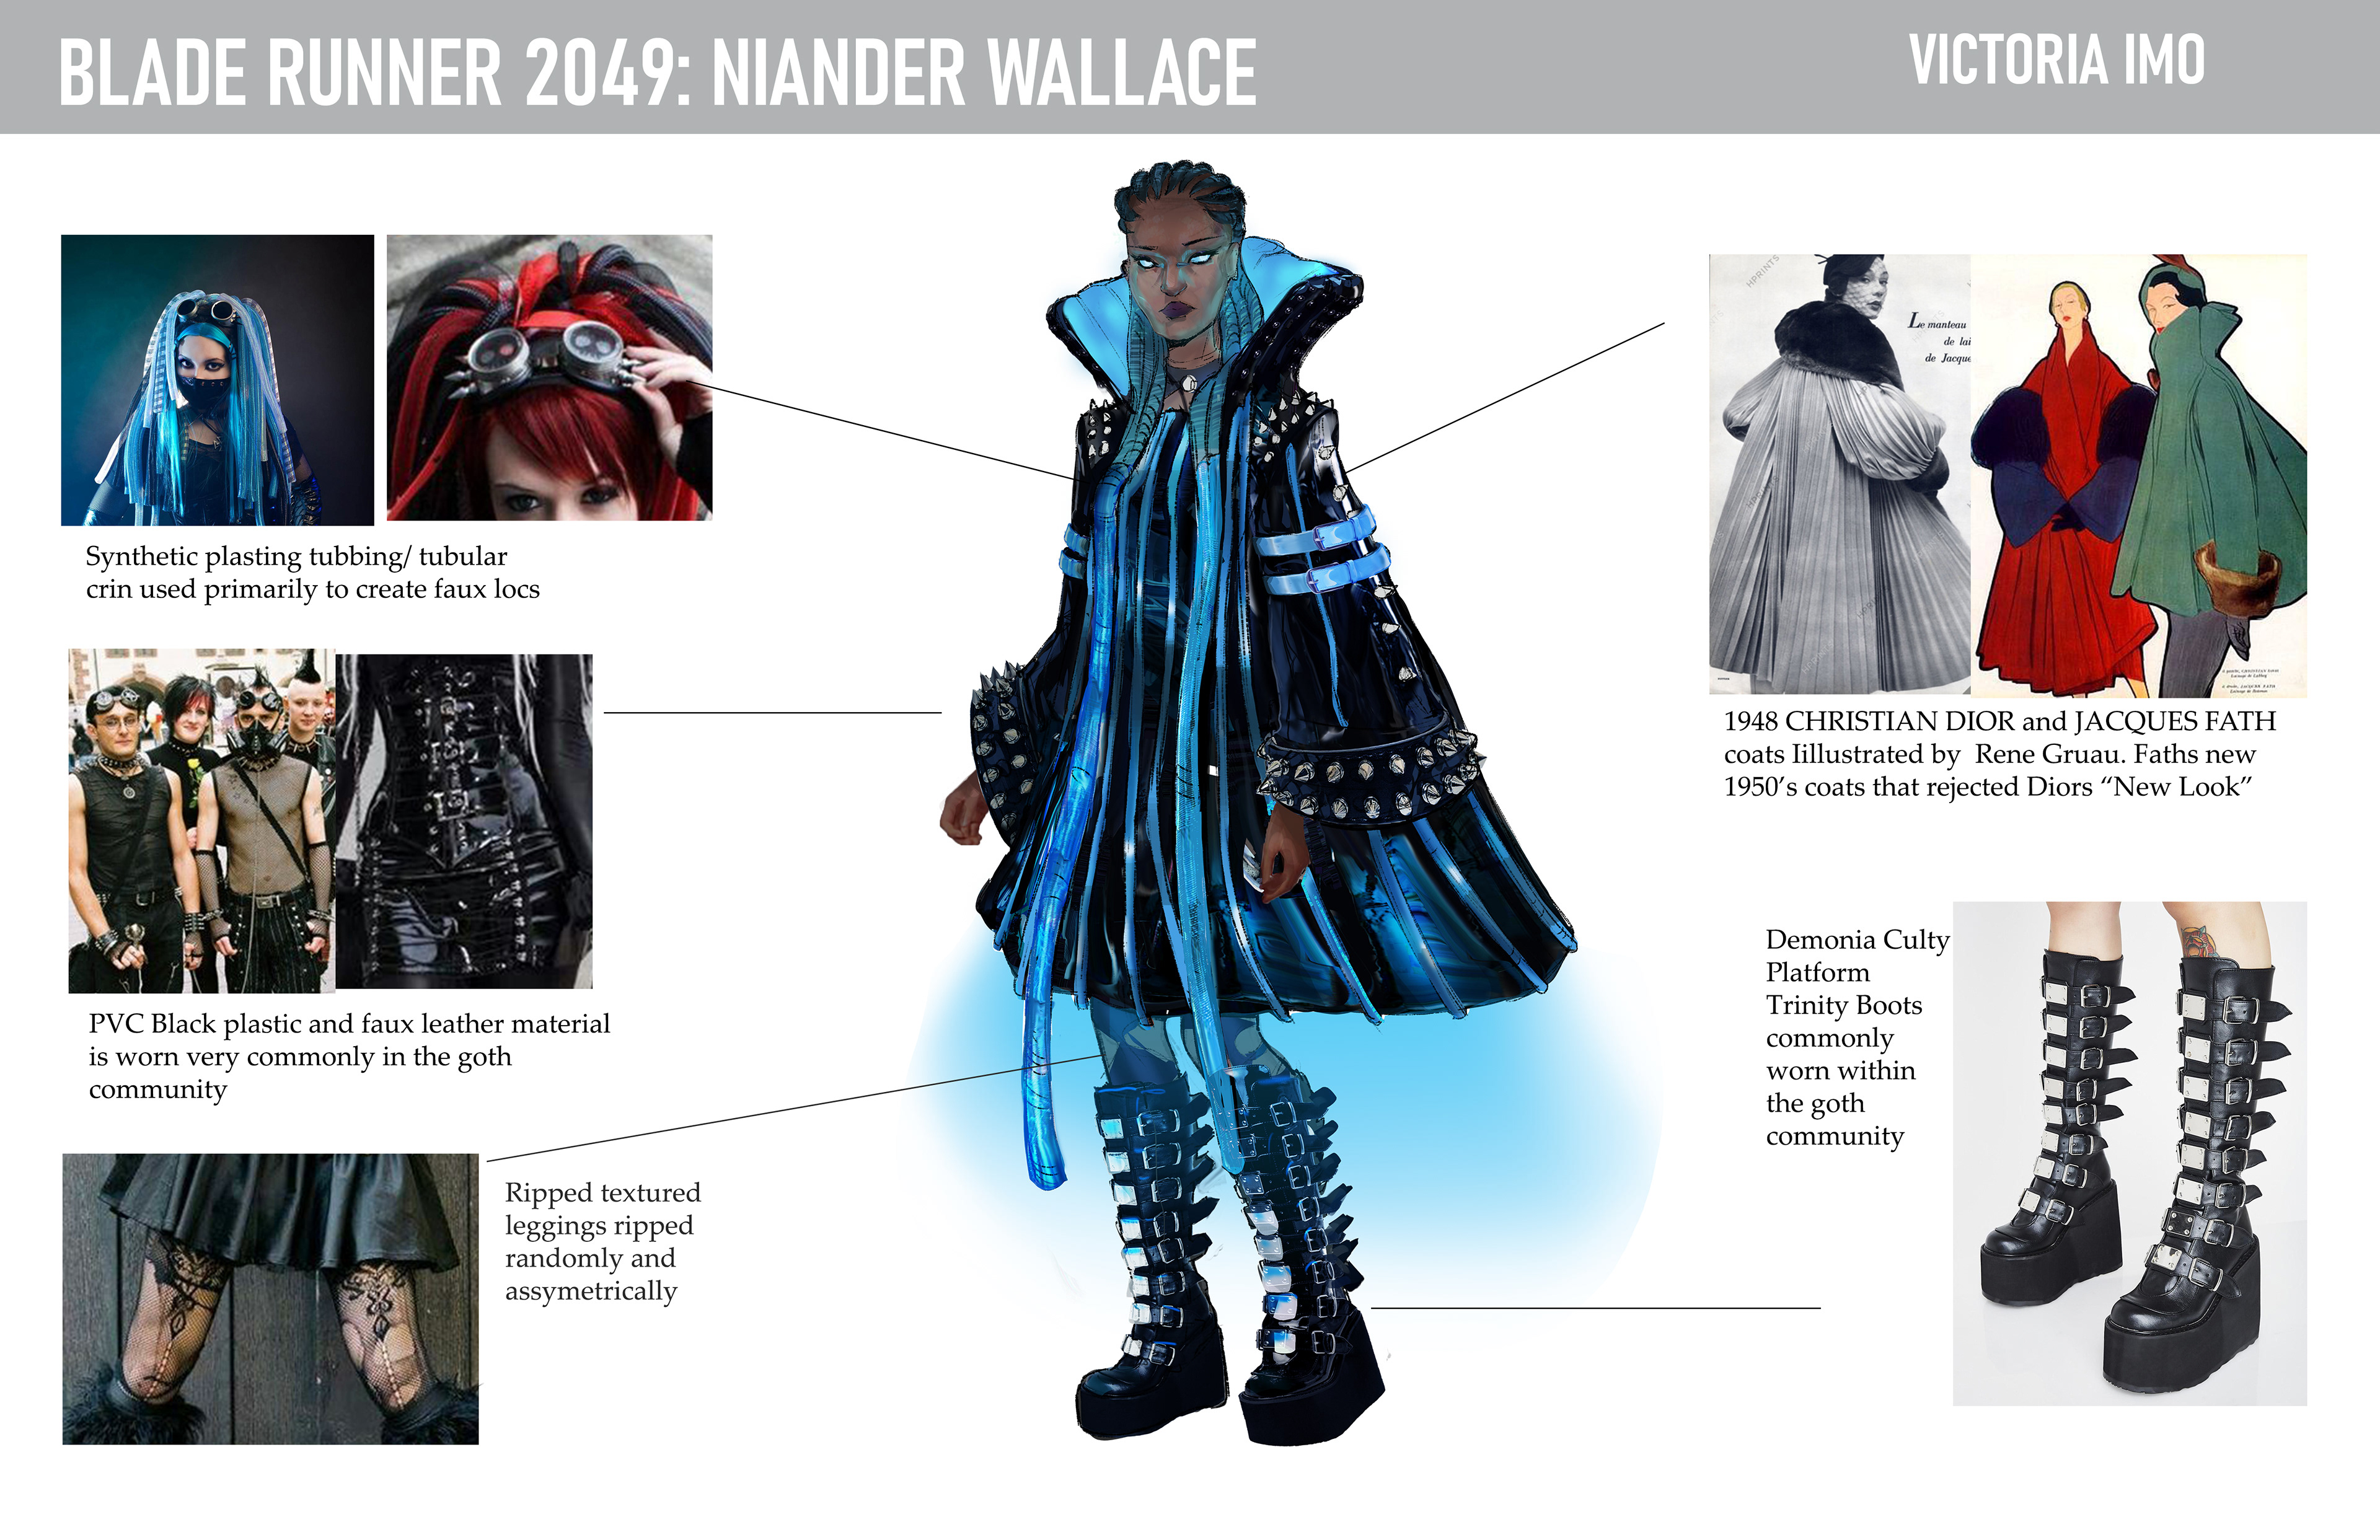 Blade Runner 2049 Inspired Clothes - Blade Runner Inspired Fashion